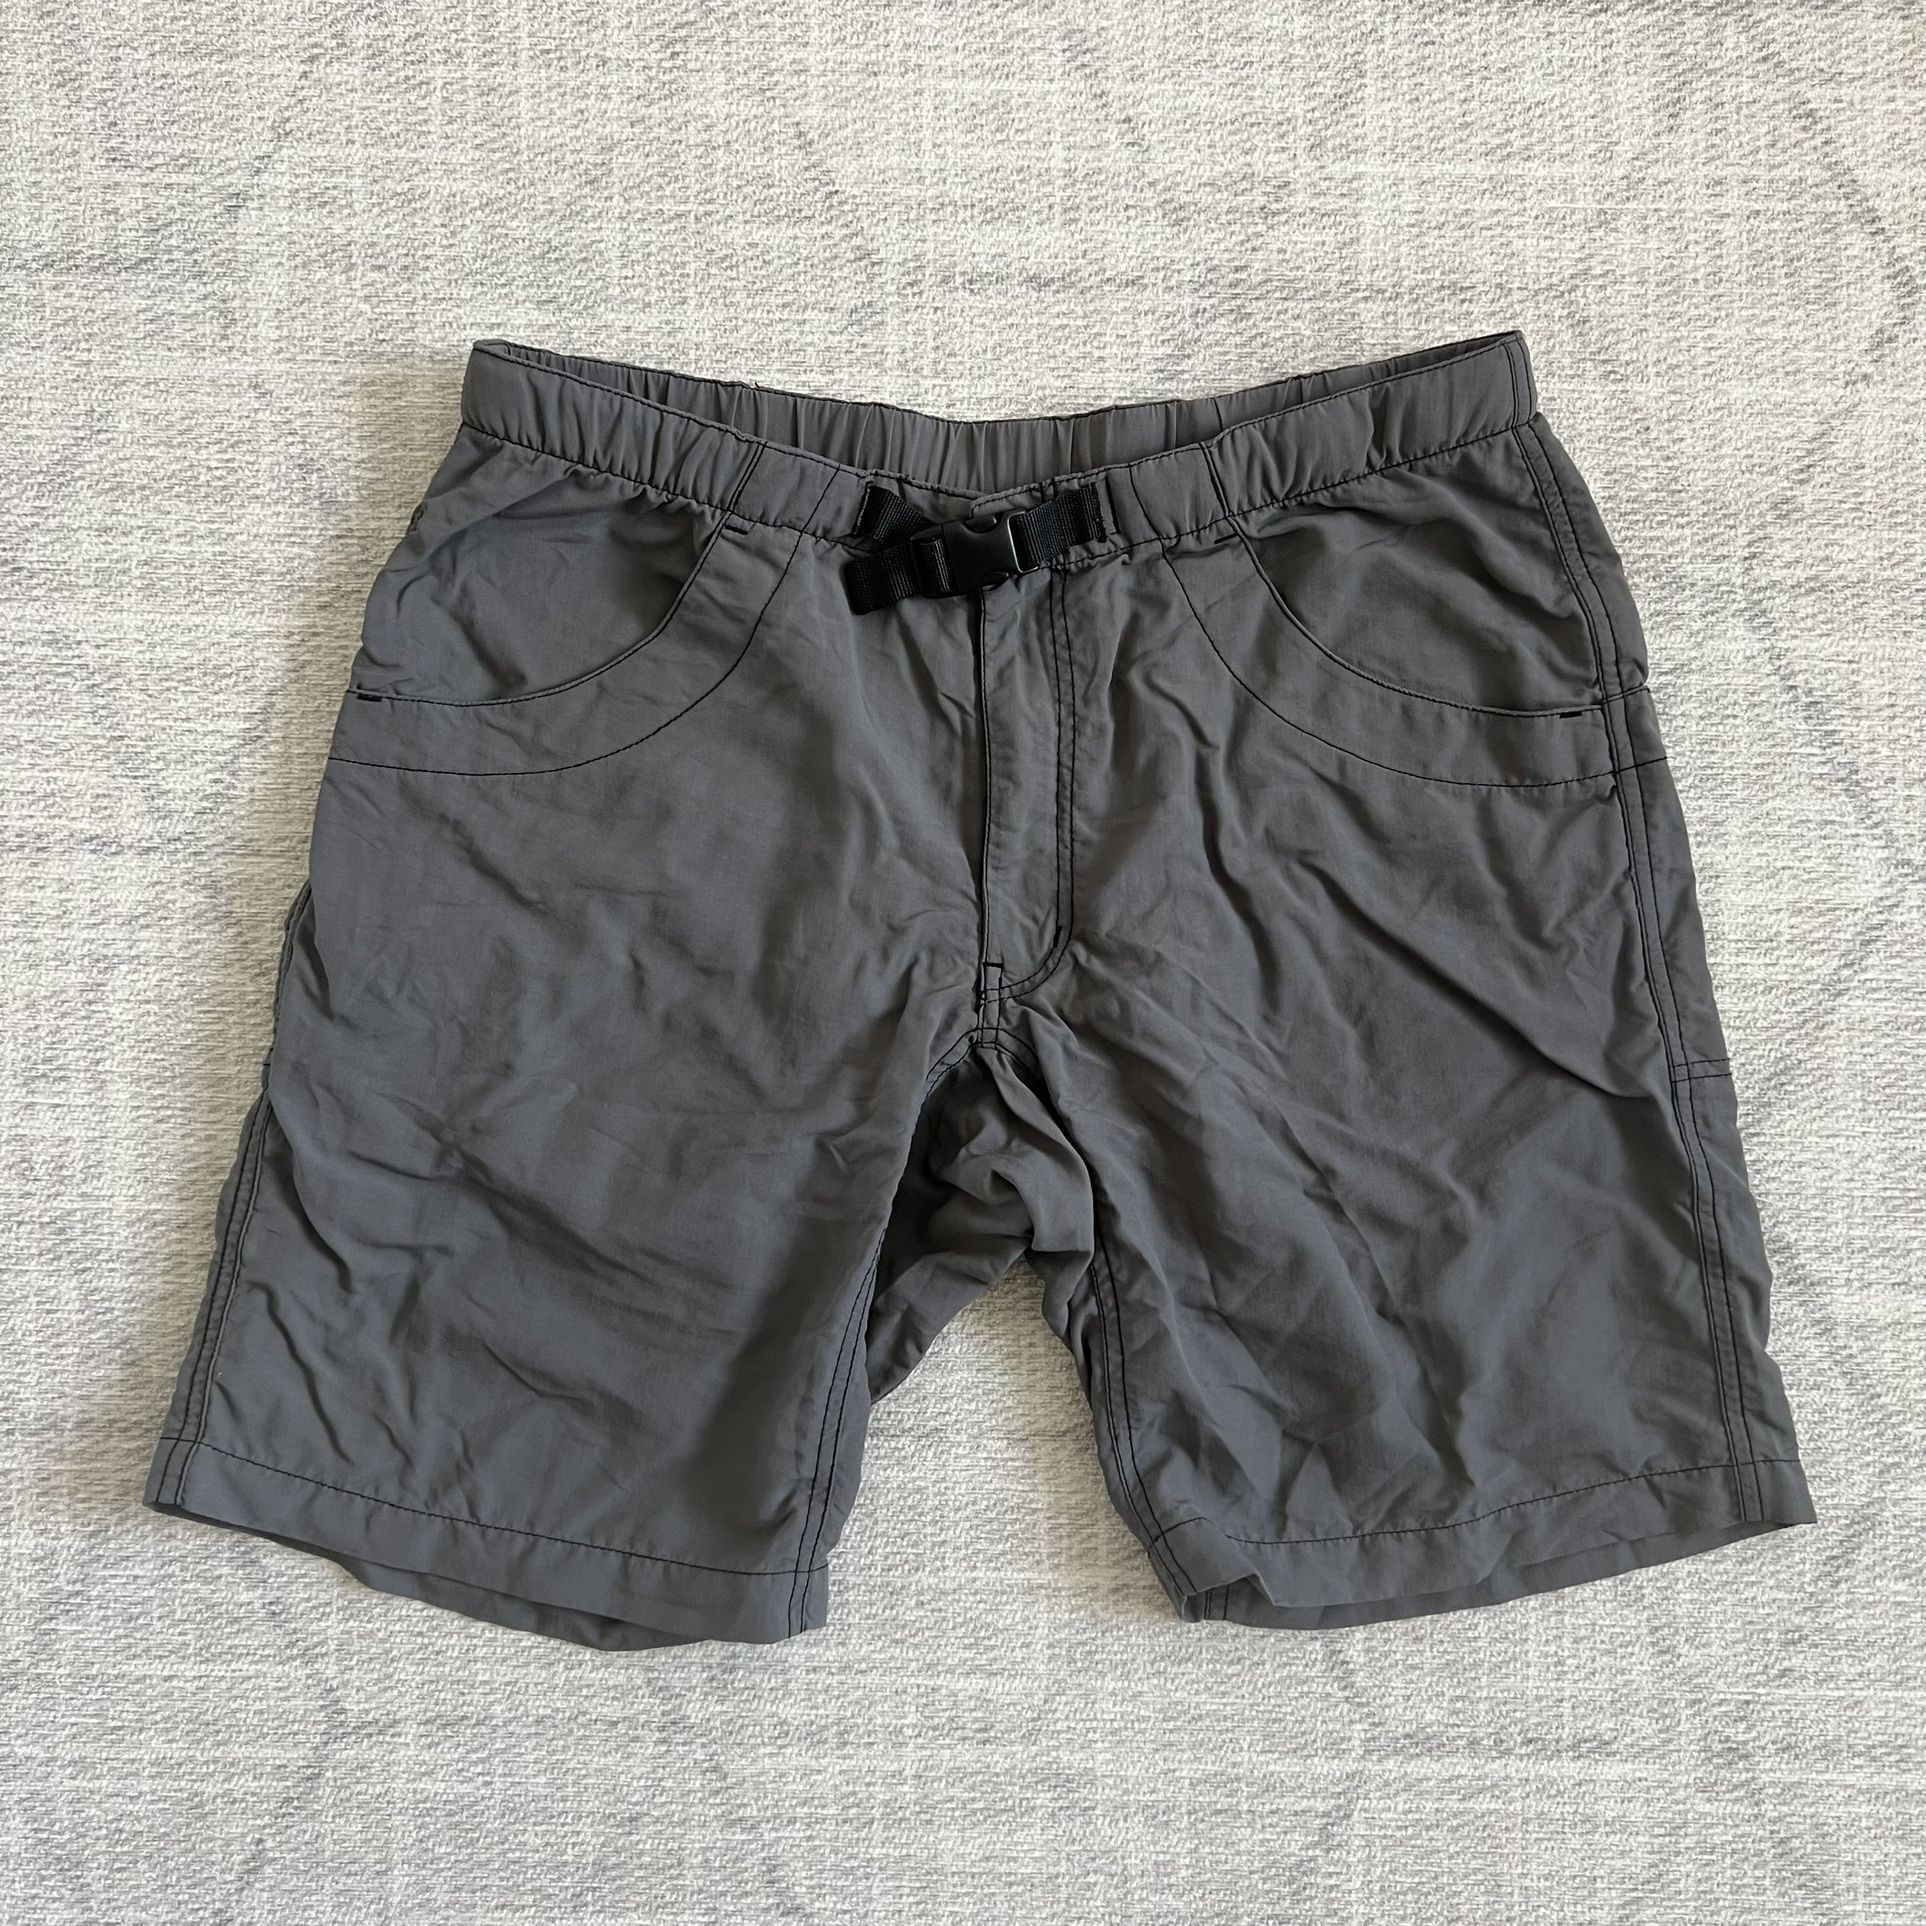 KAVU Men’s Grey Outdoors Camping Hiking Nylon Shorts